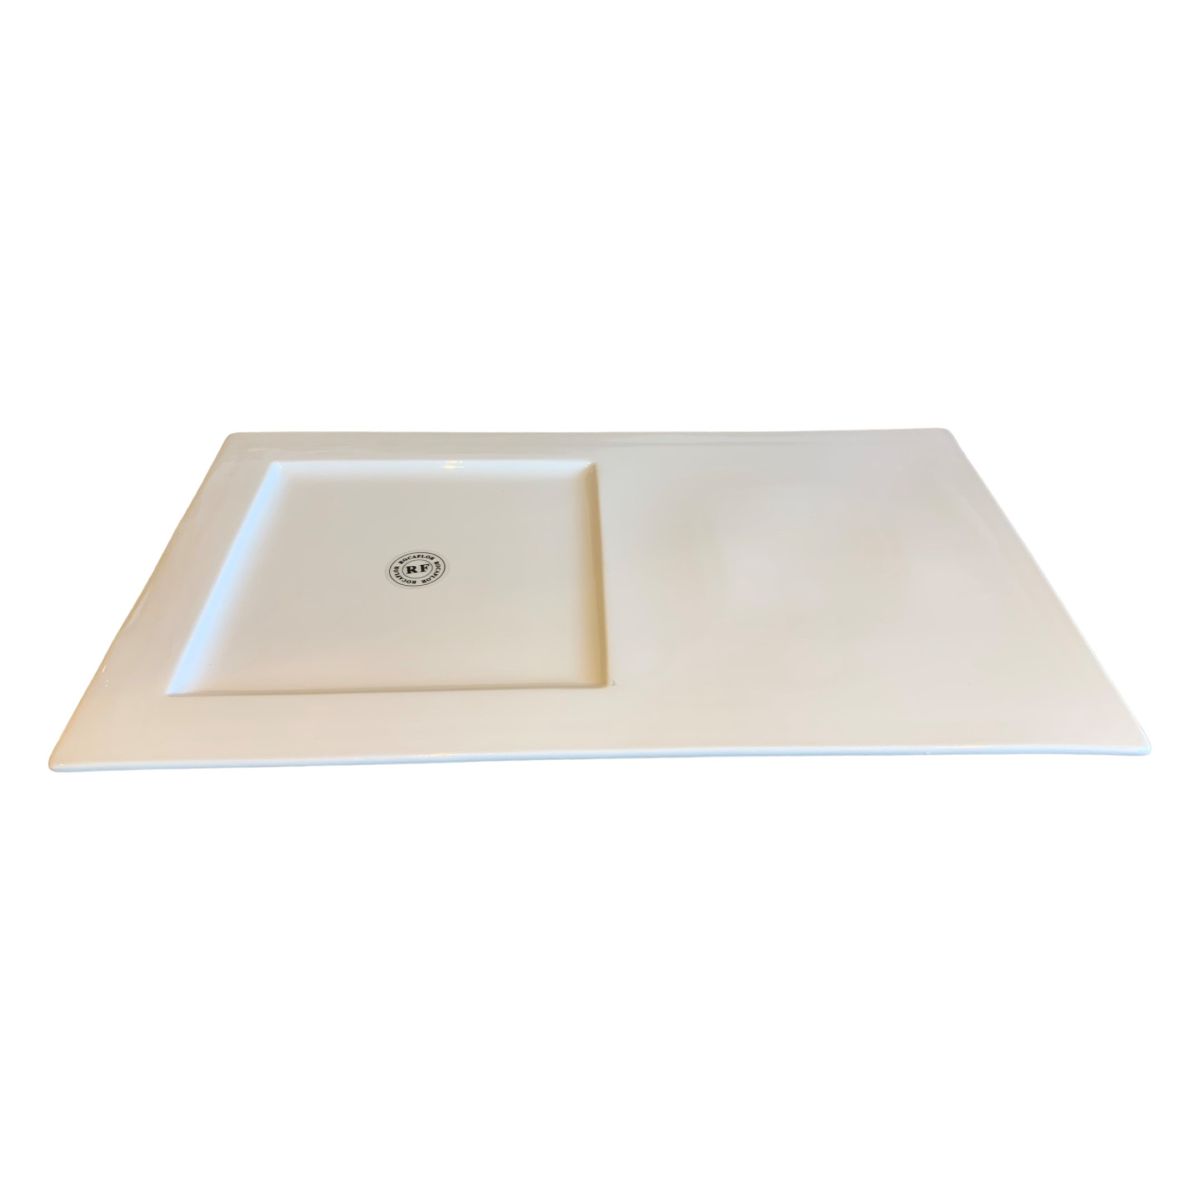 bord wit porselein strak design rechthoekig 424x242cmbox 2